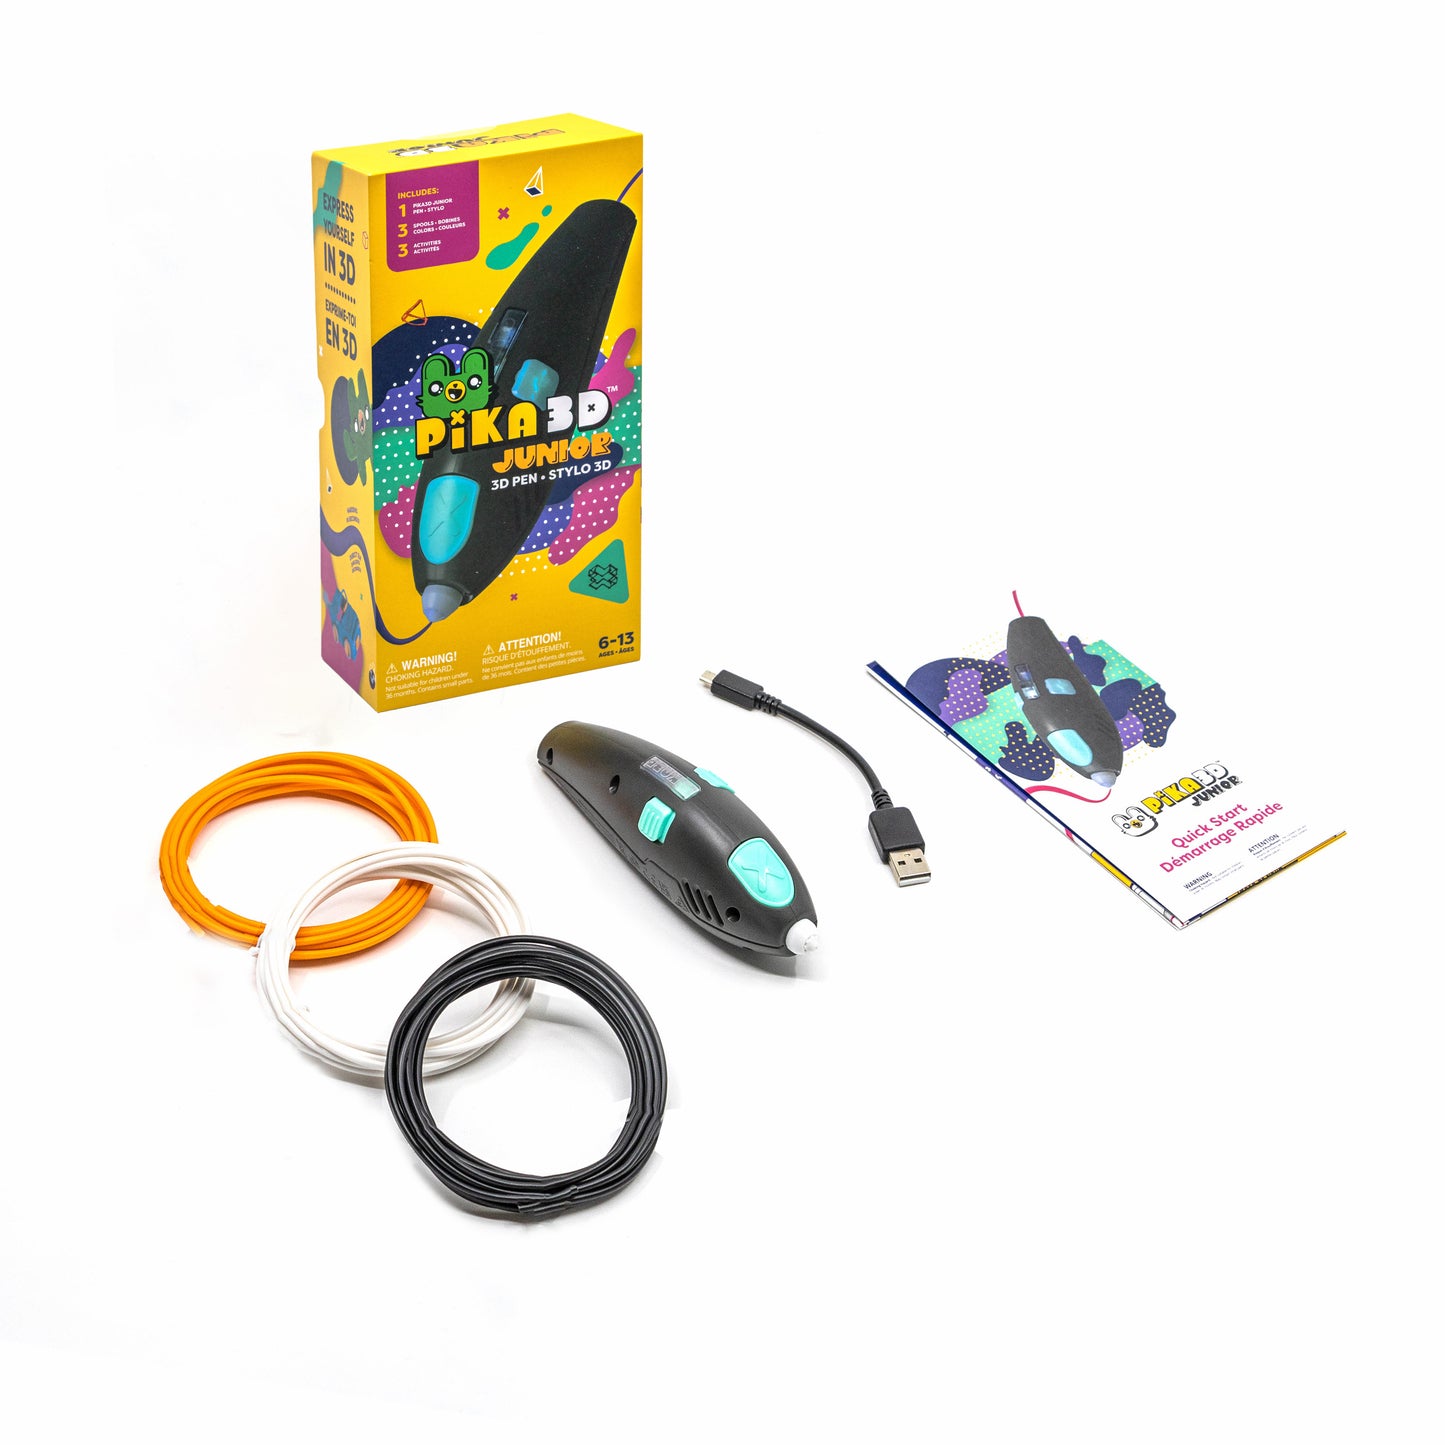 PiKA3D Junior 3D Printing Pen for Kids Ages 6+